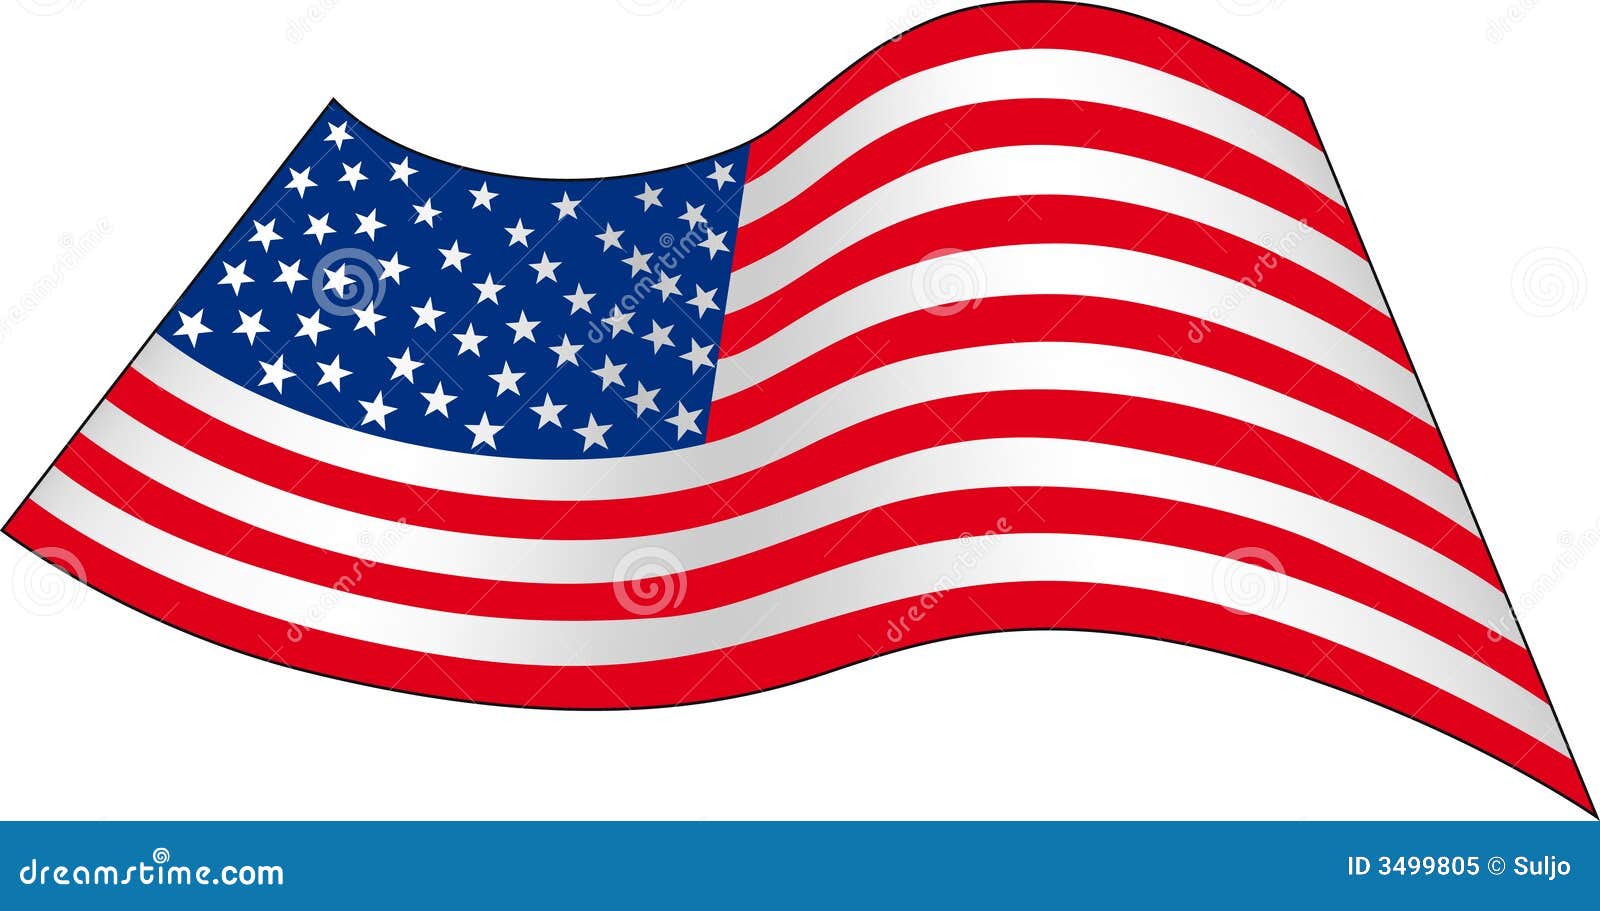 royalty free american flag clip art - photo #10